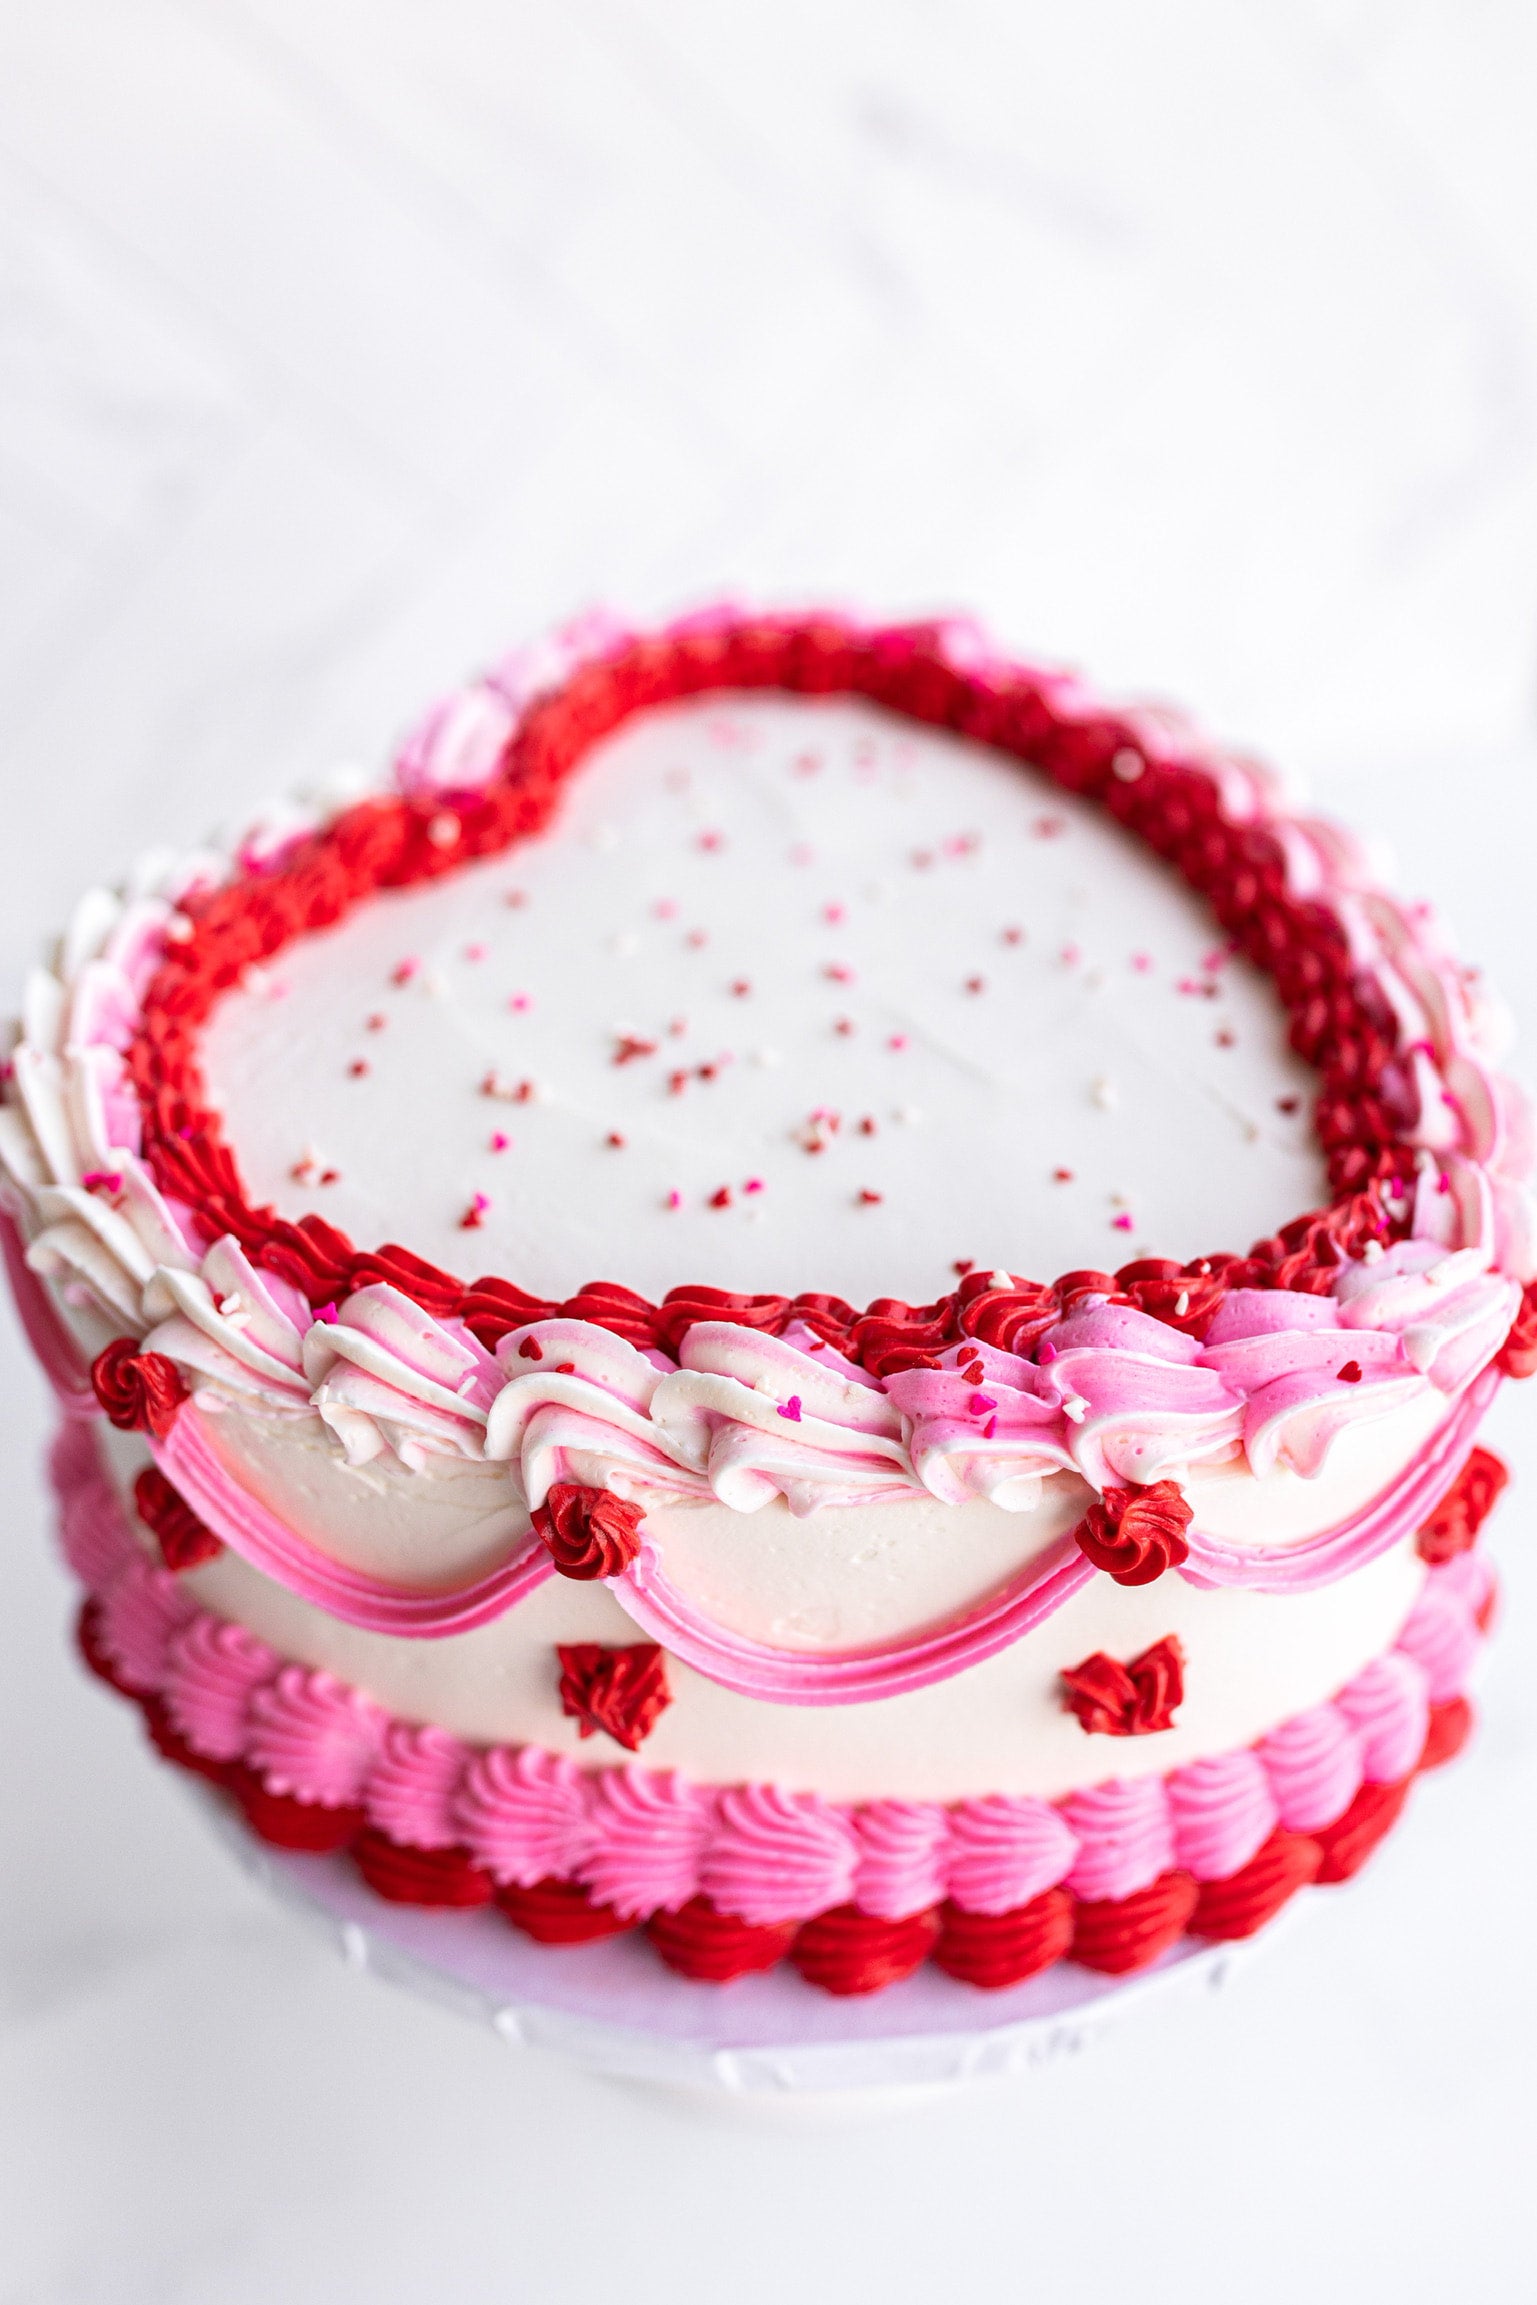 Red & White Valentine's Day Cake | Baked by Nataleen-mncb.edu.vn